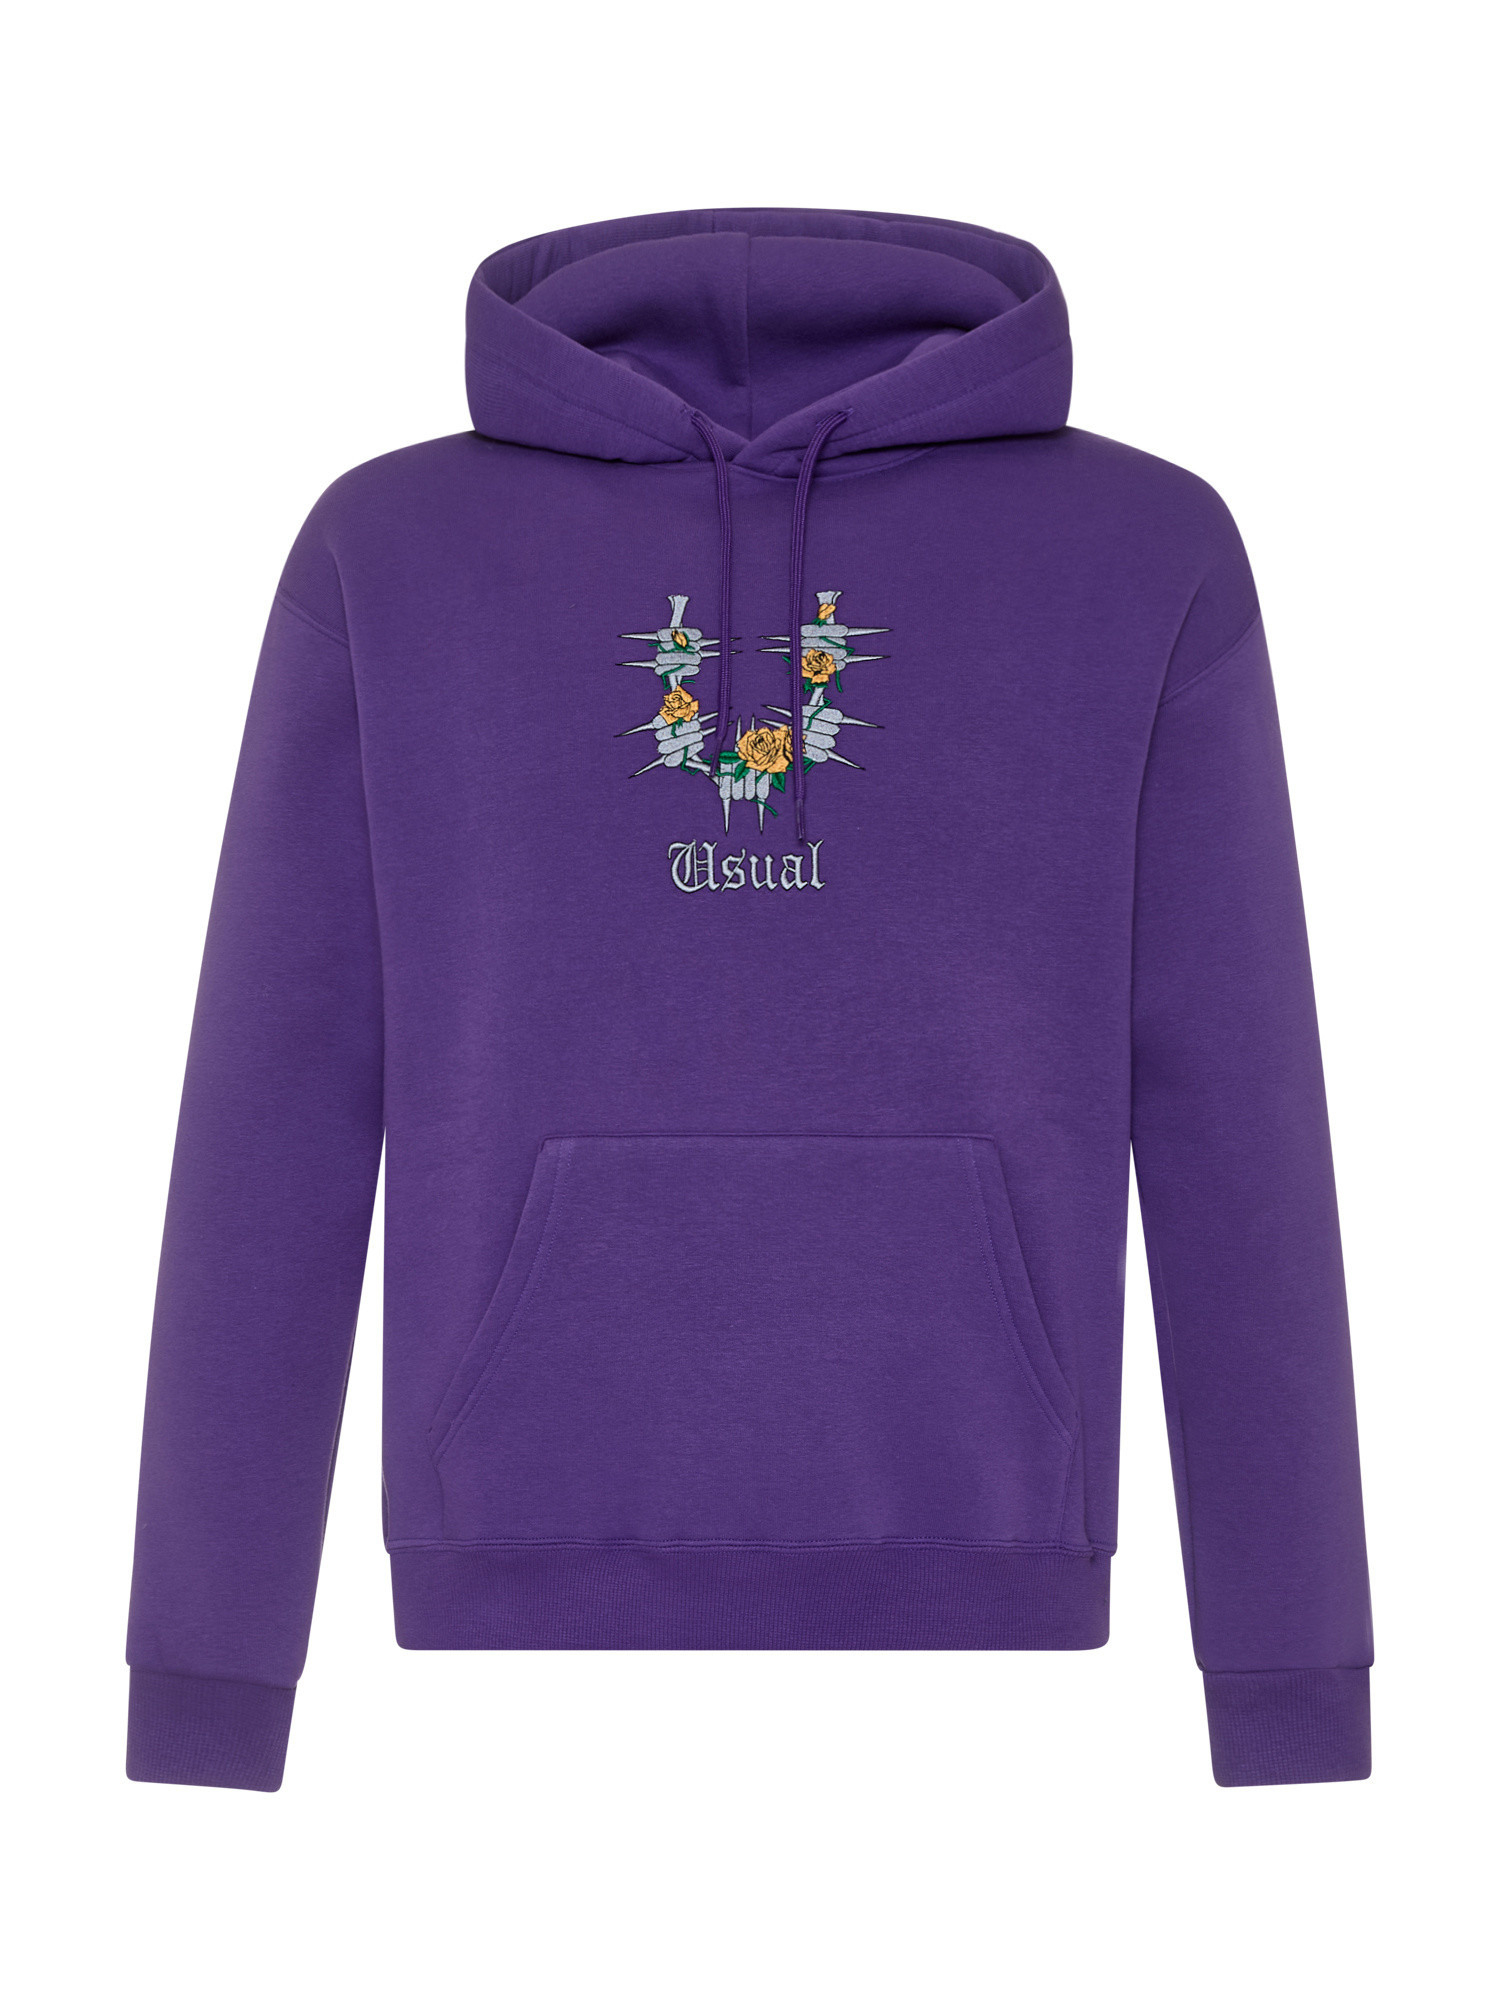 Usual - Barrio Hooded Sweatshirt, Purple, large image number 0